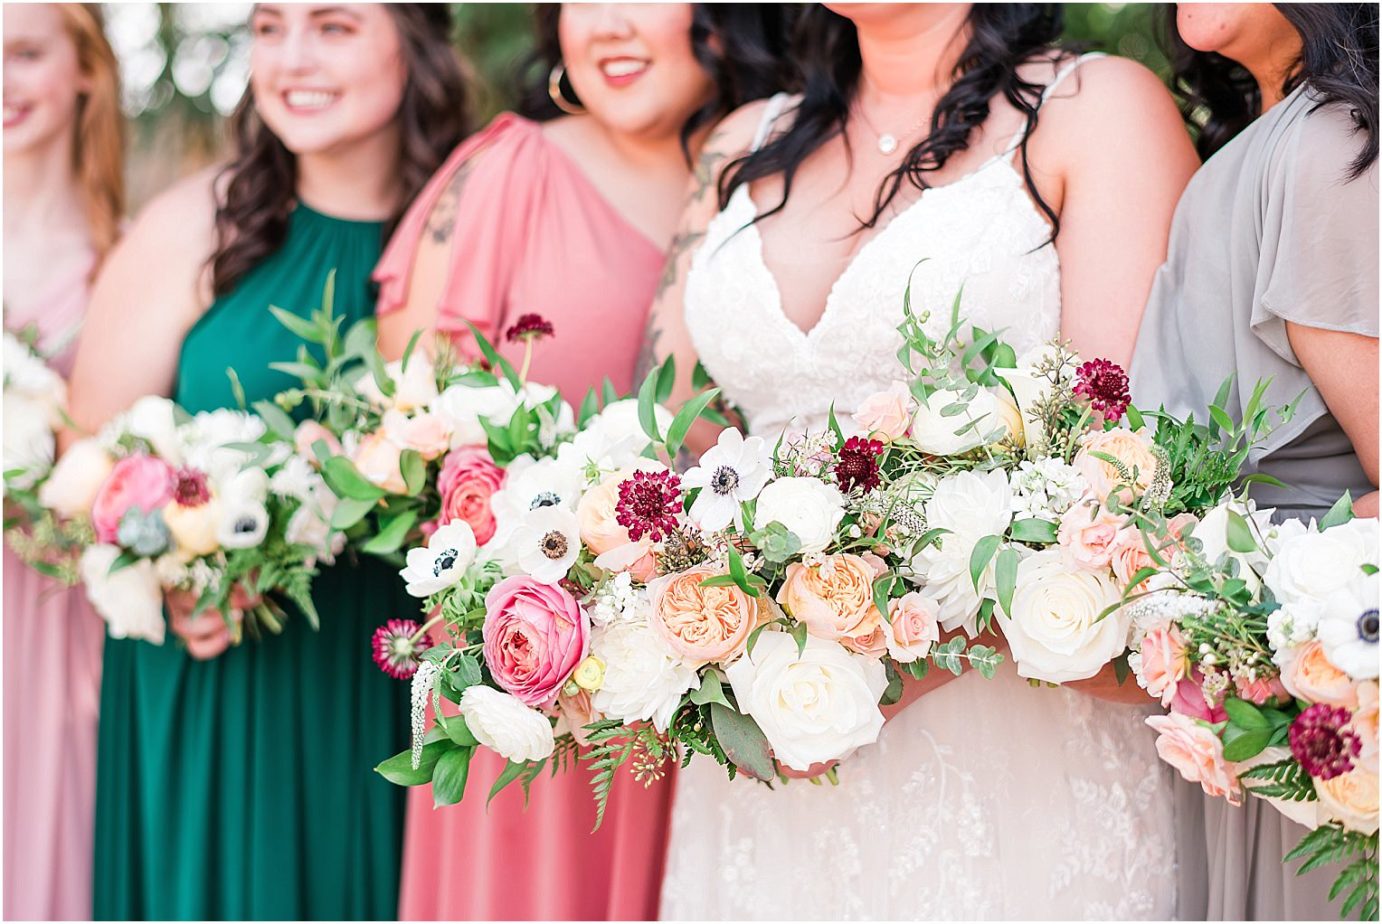 Favorite wedding flowers of 2019 Misty C Photography Blog_0001